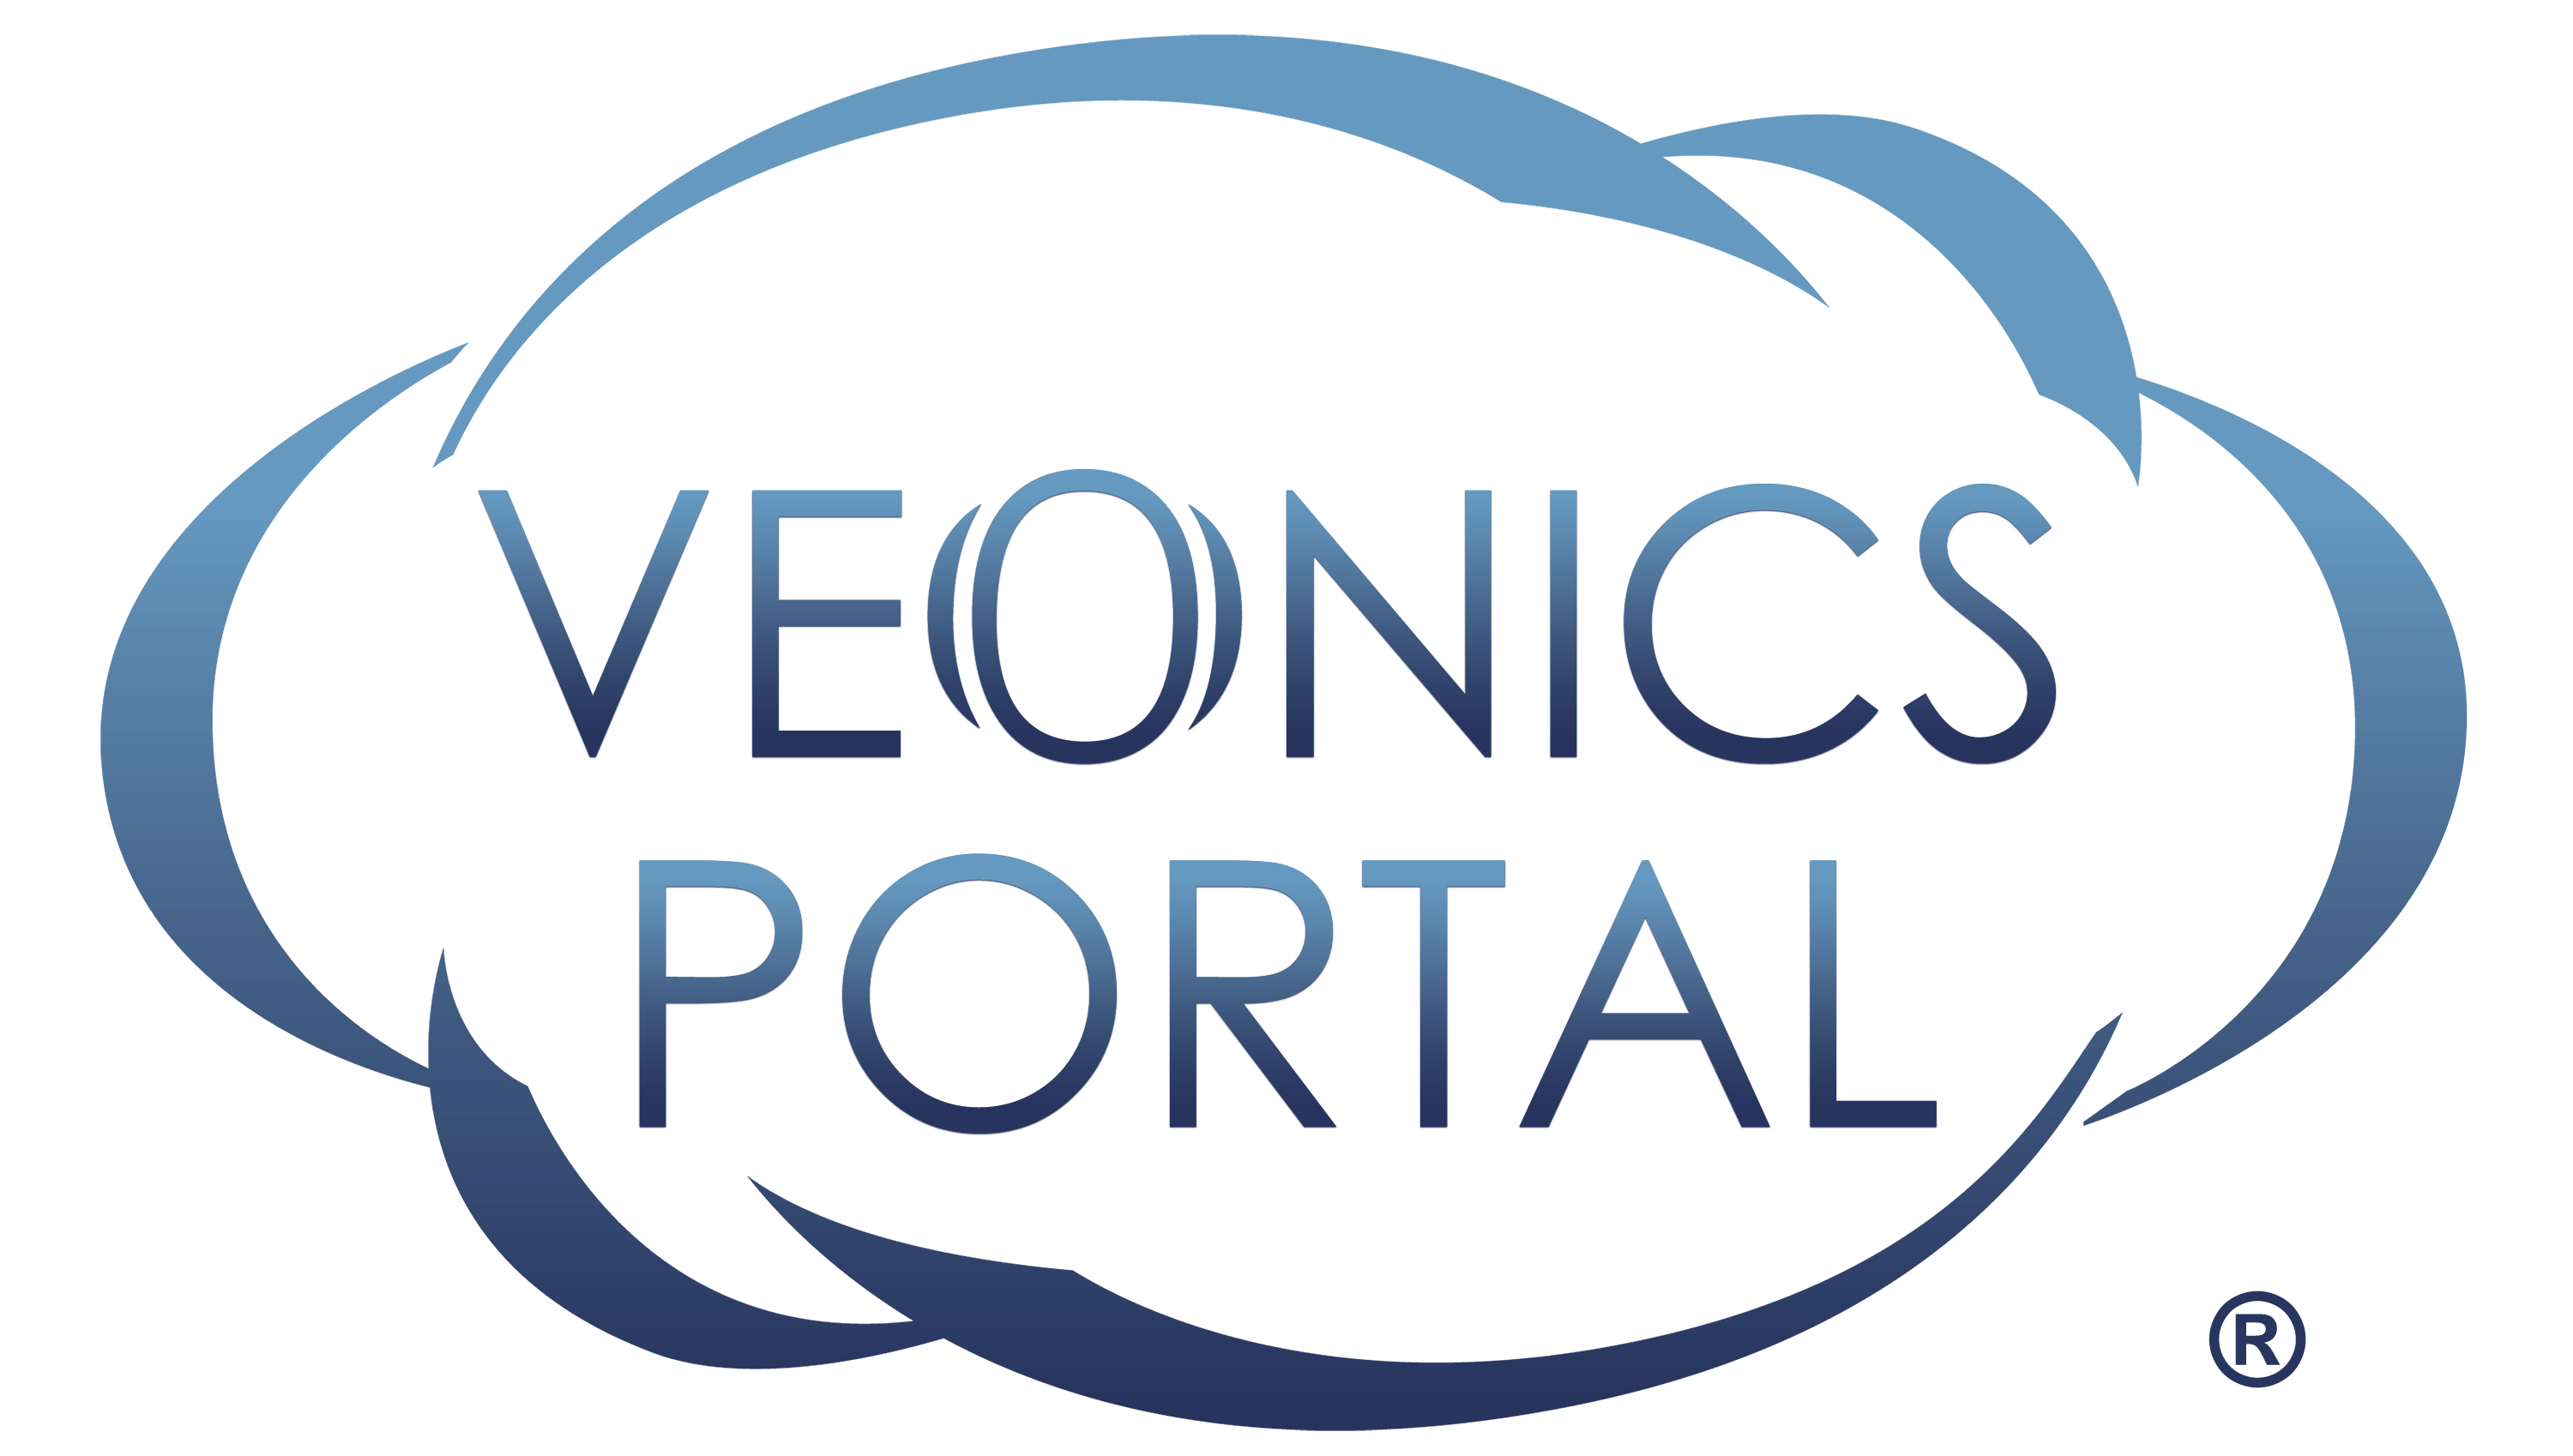 Veonics Portal badge printing software